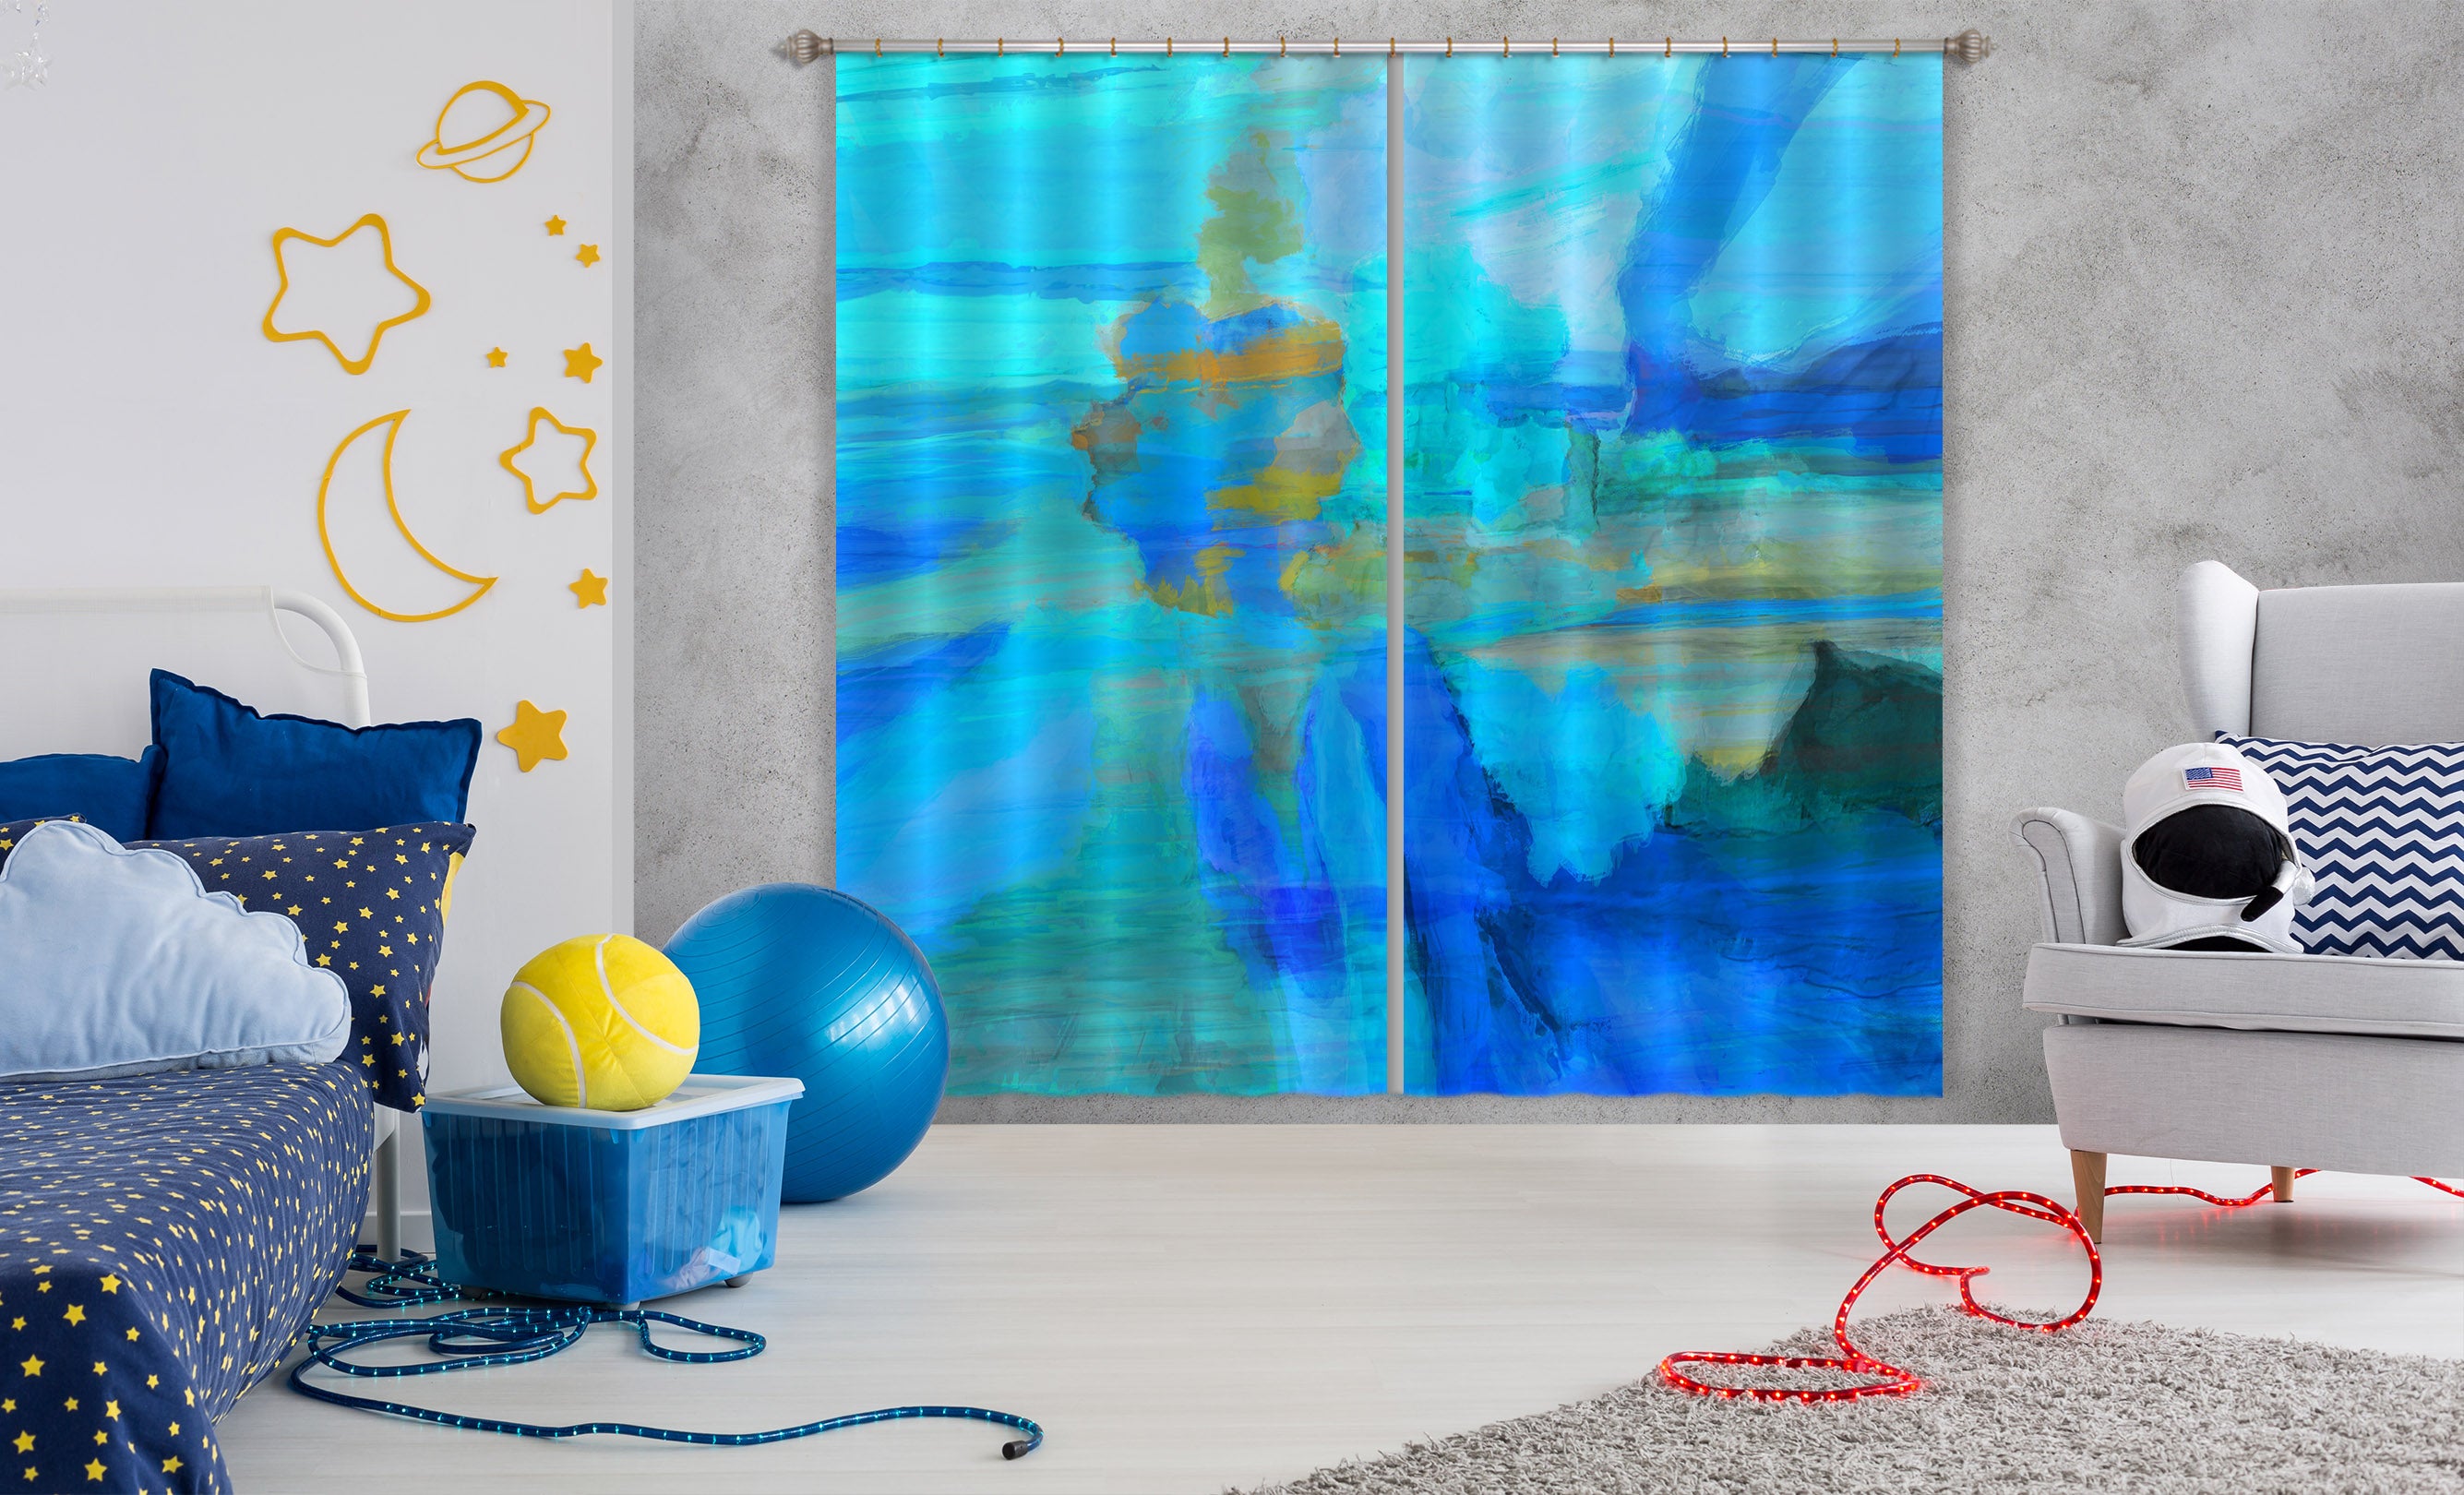 3D Blue Sea 051 Michael Tienhaara Curtain Curtains Drapes